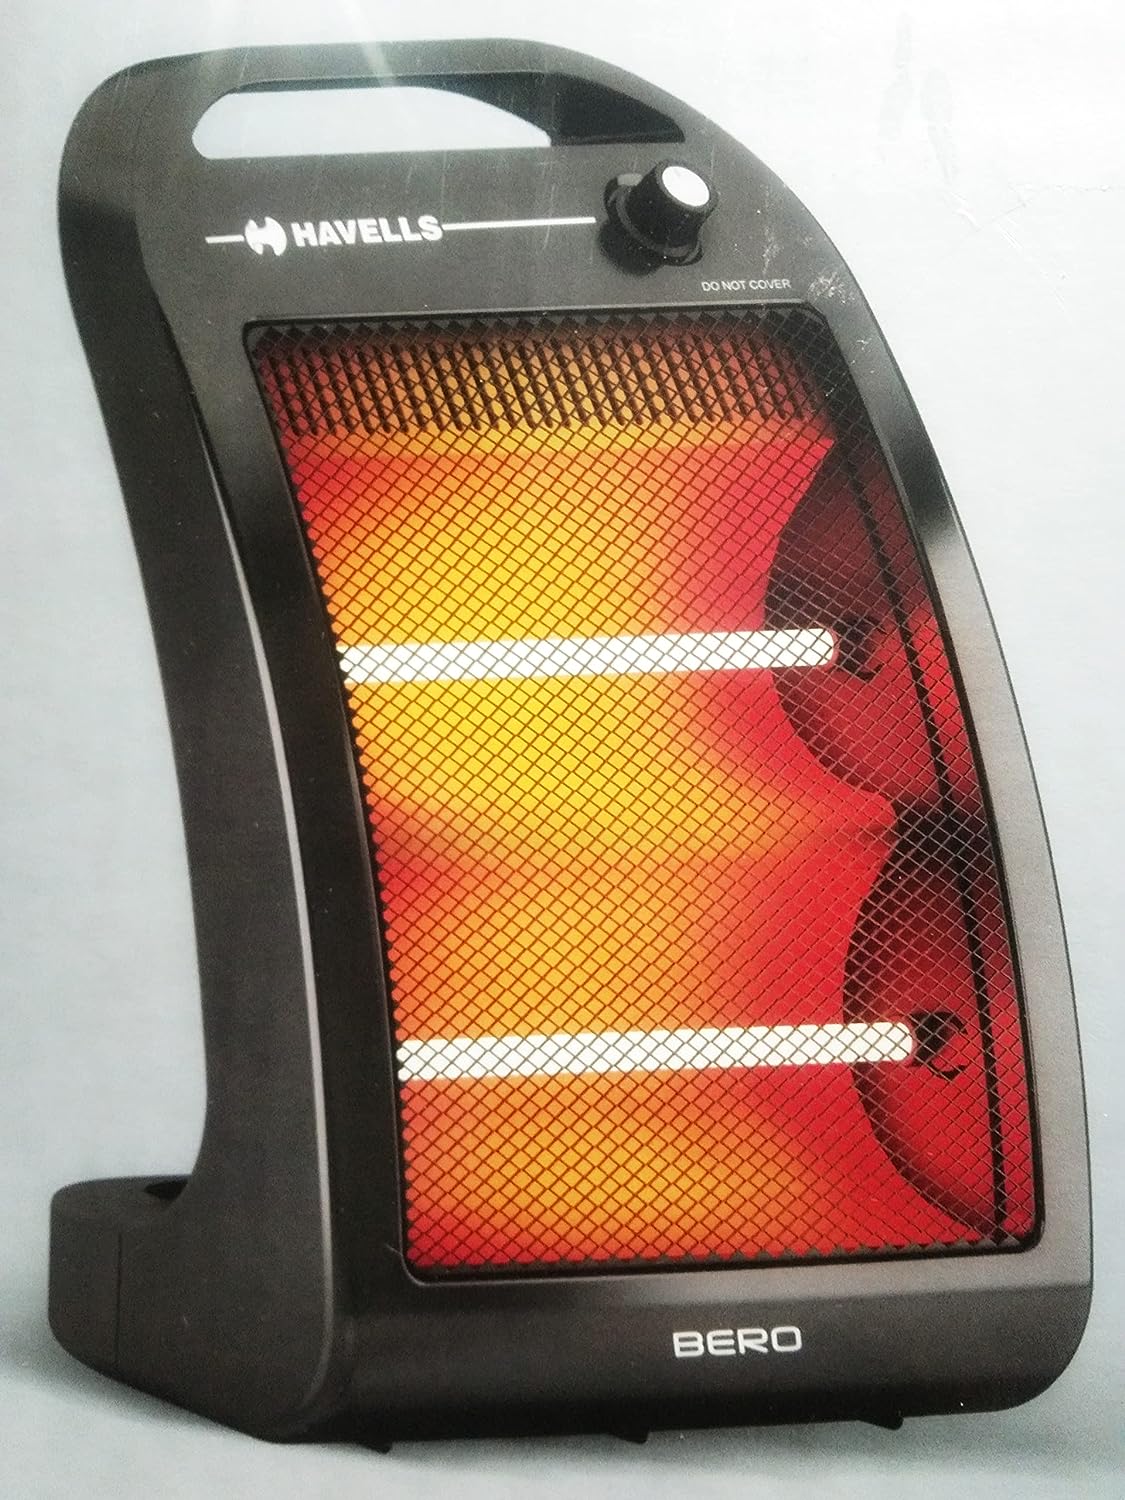 Havells Bero Quartz Heater Black 800 watt